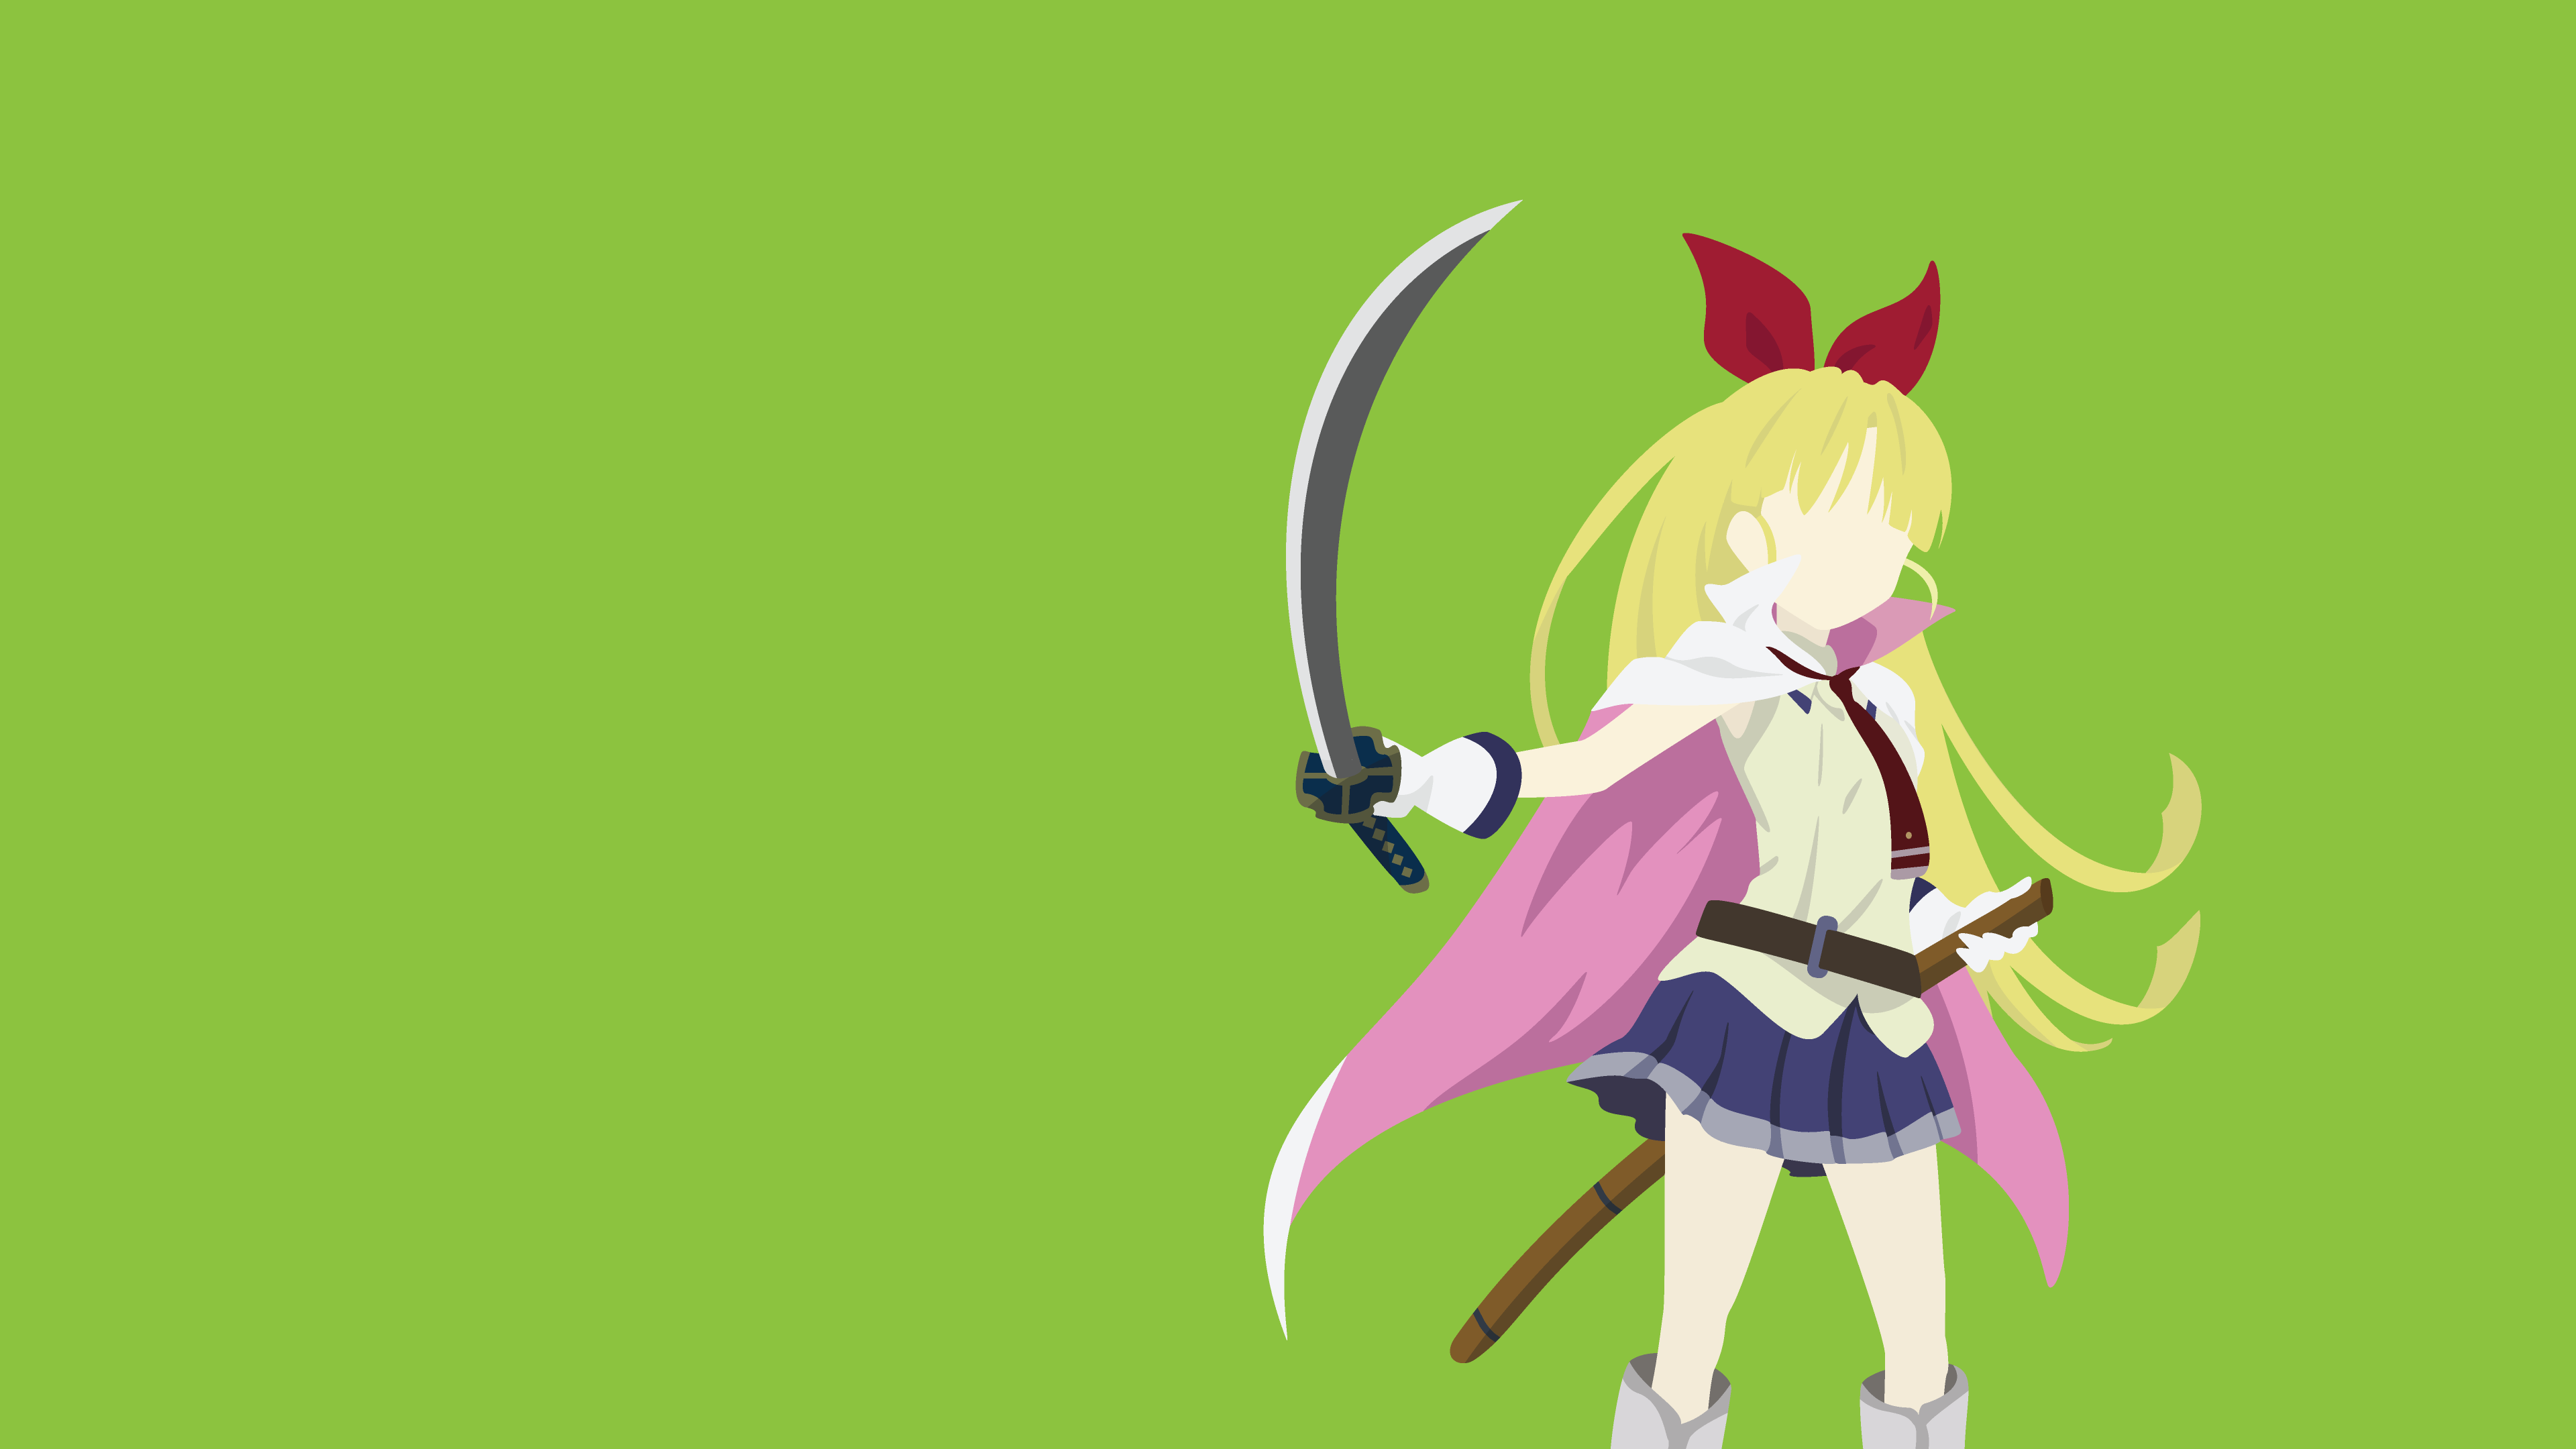 Anime Armed Girl's Machiavellism 4k Ultra HD Wallpaper by Luridu